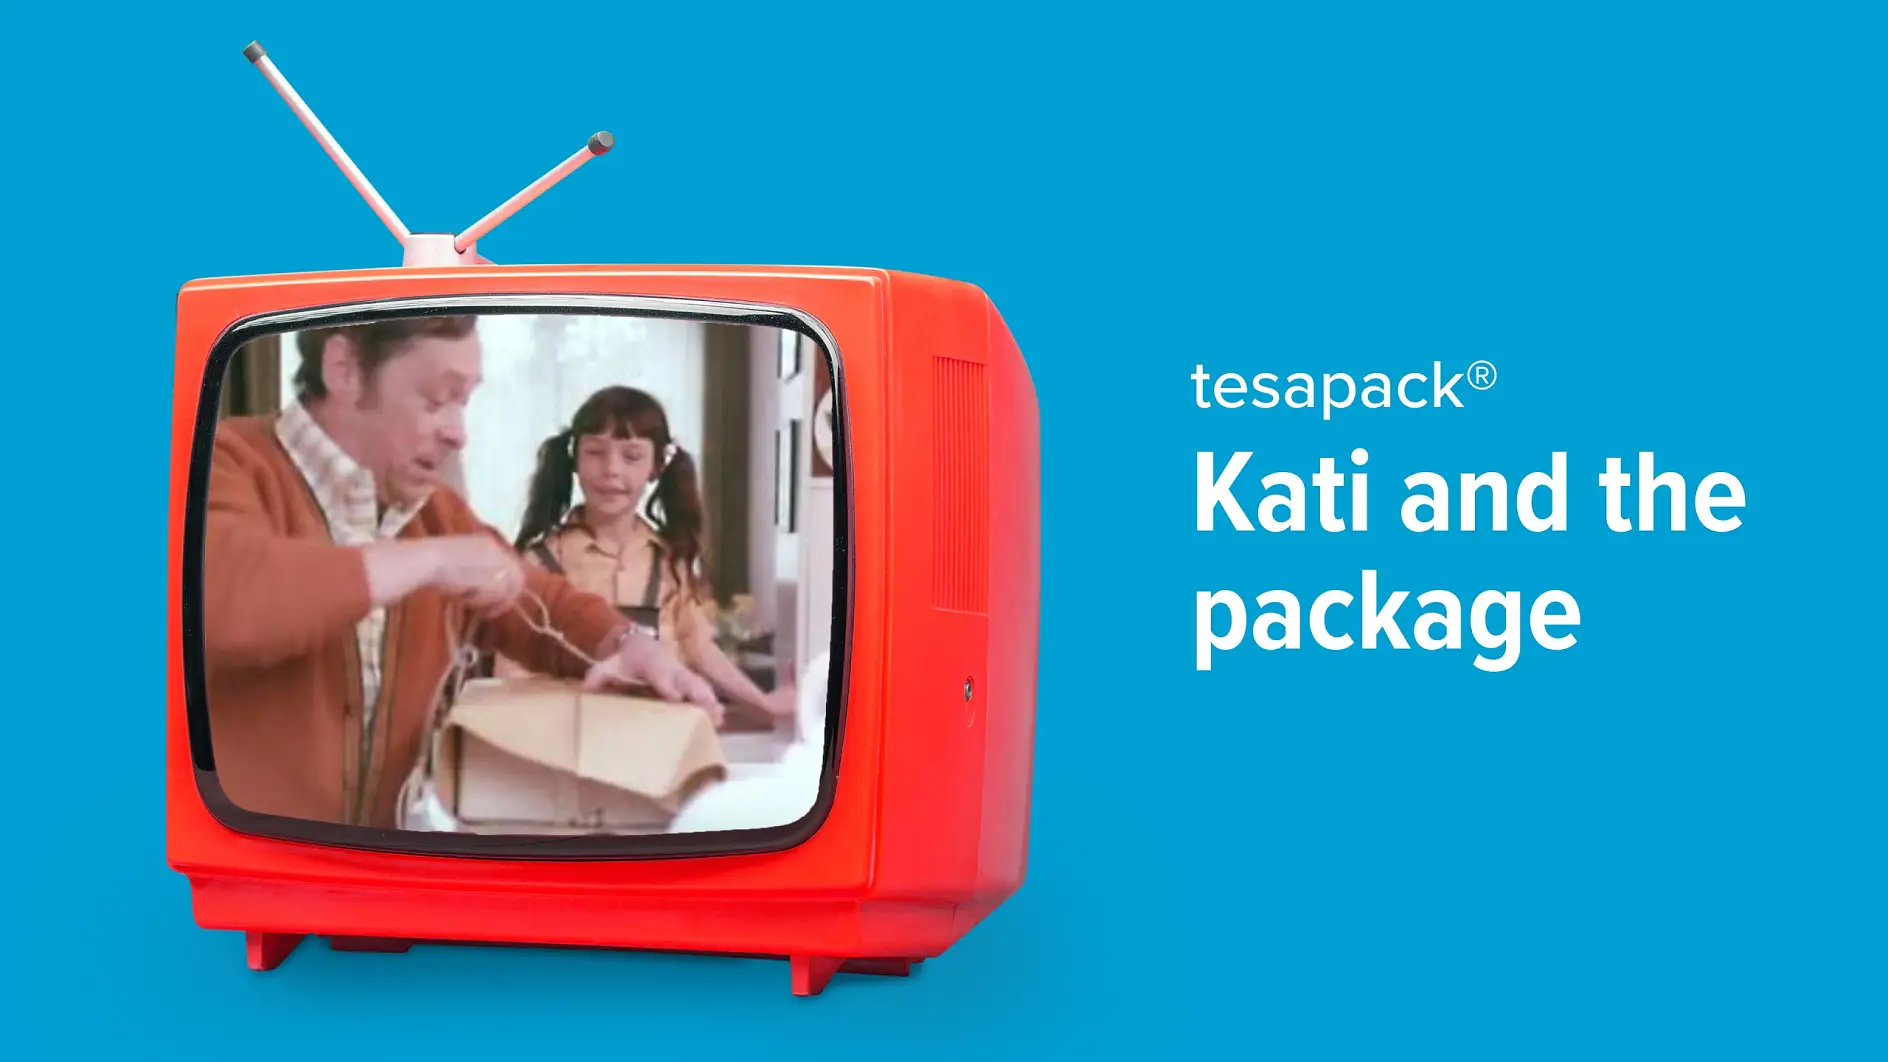 tesapack® Kati and the package